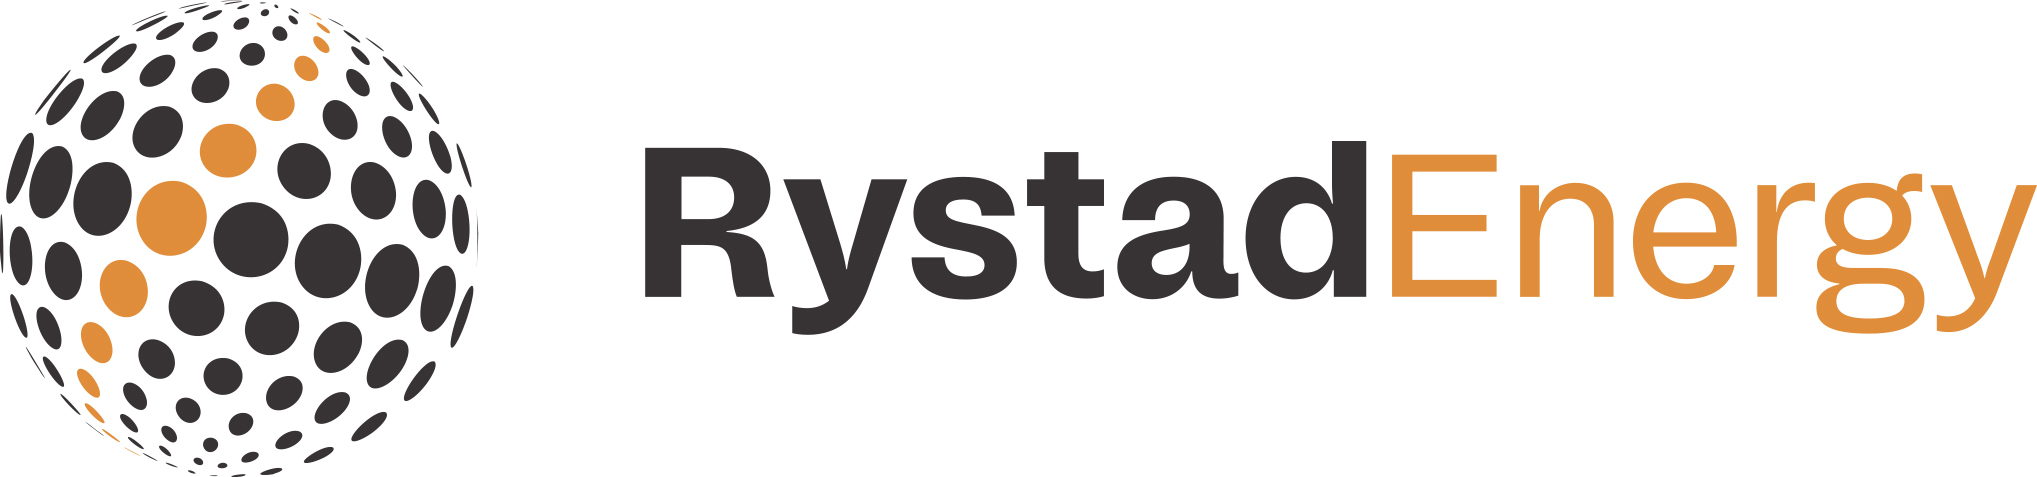 Rystad Energy logo